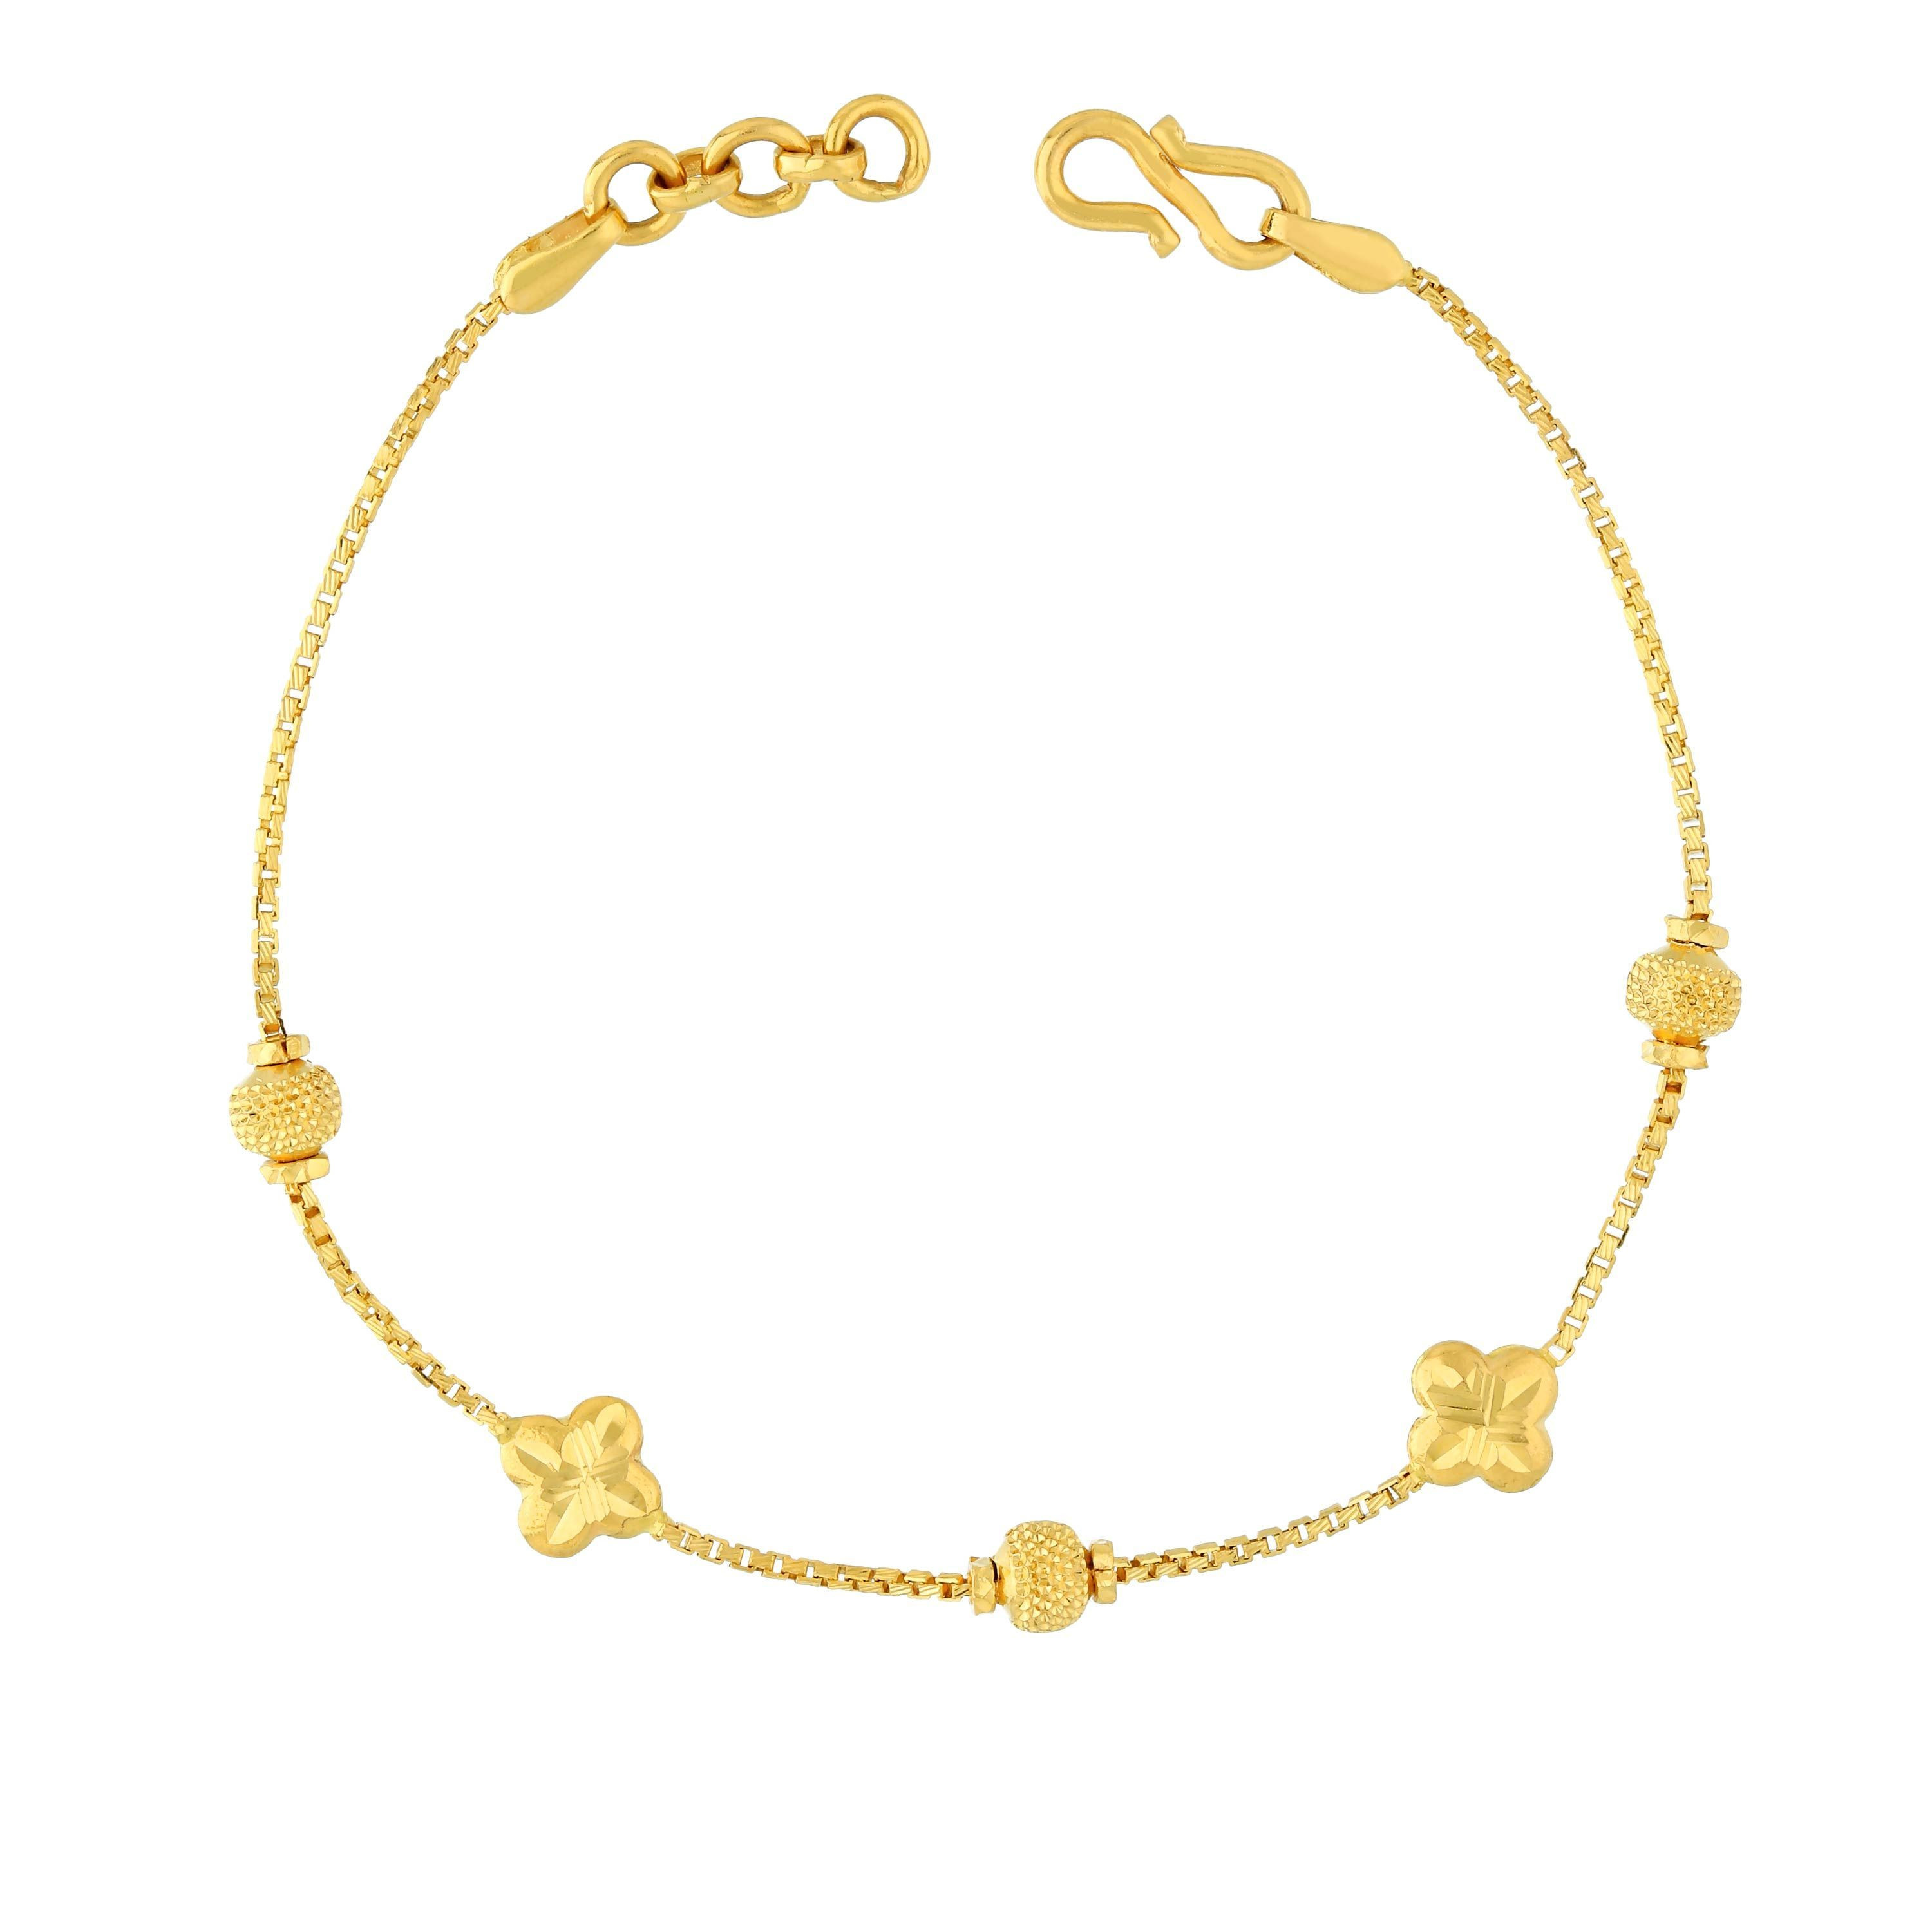 Shop Bracelets for Women: Bangles, chains & more - Skagen